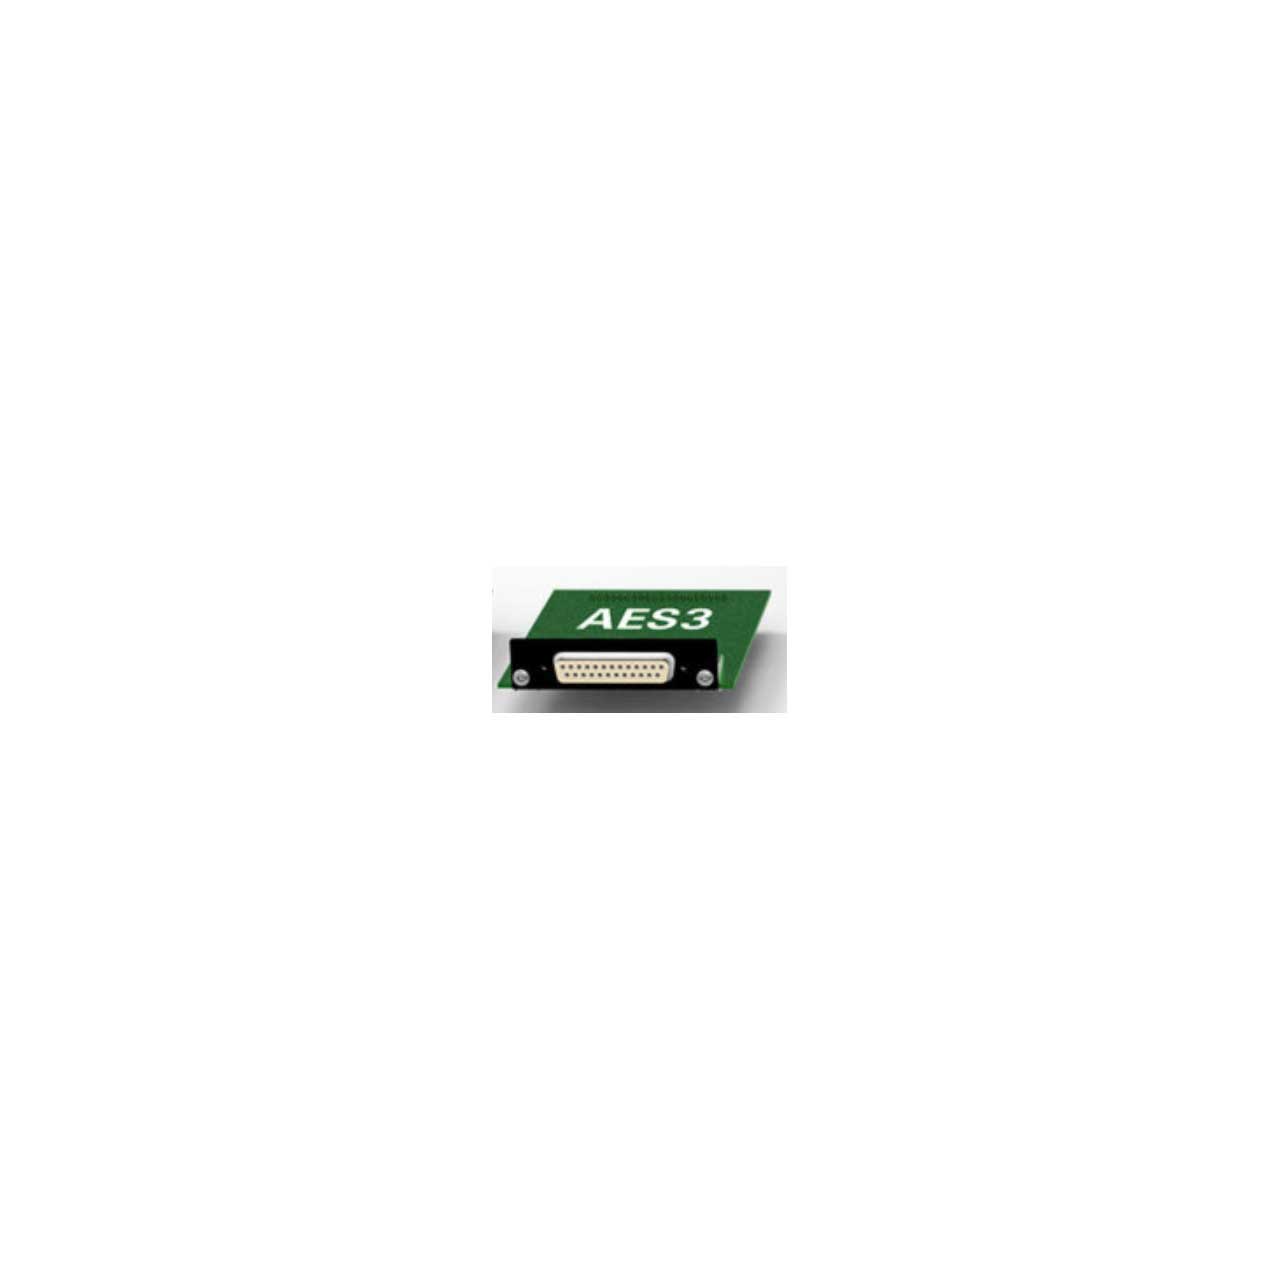 Appsys Pro Audio AUX AES3 8 x 8 Channel AES/EBU Card for Flexiverter Converters AUX-AES3